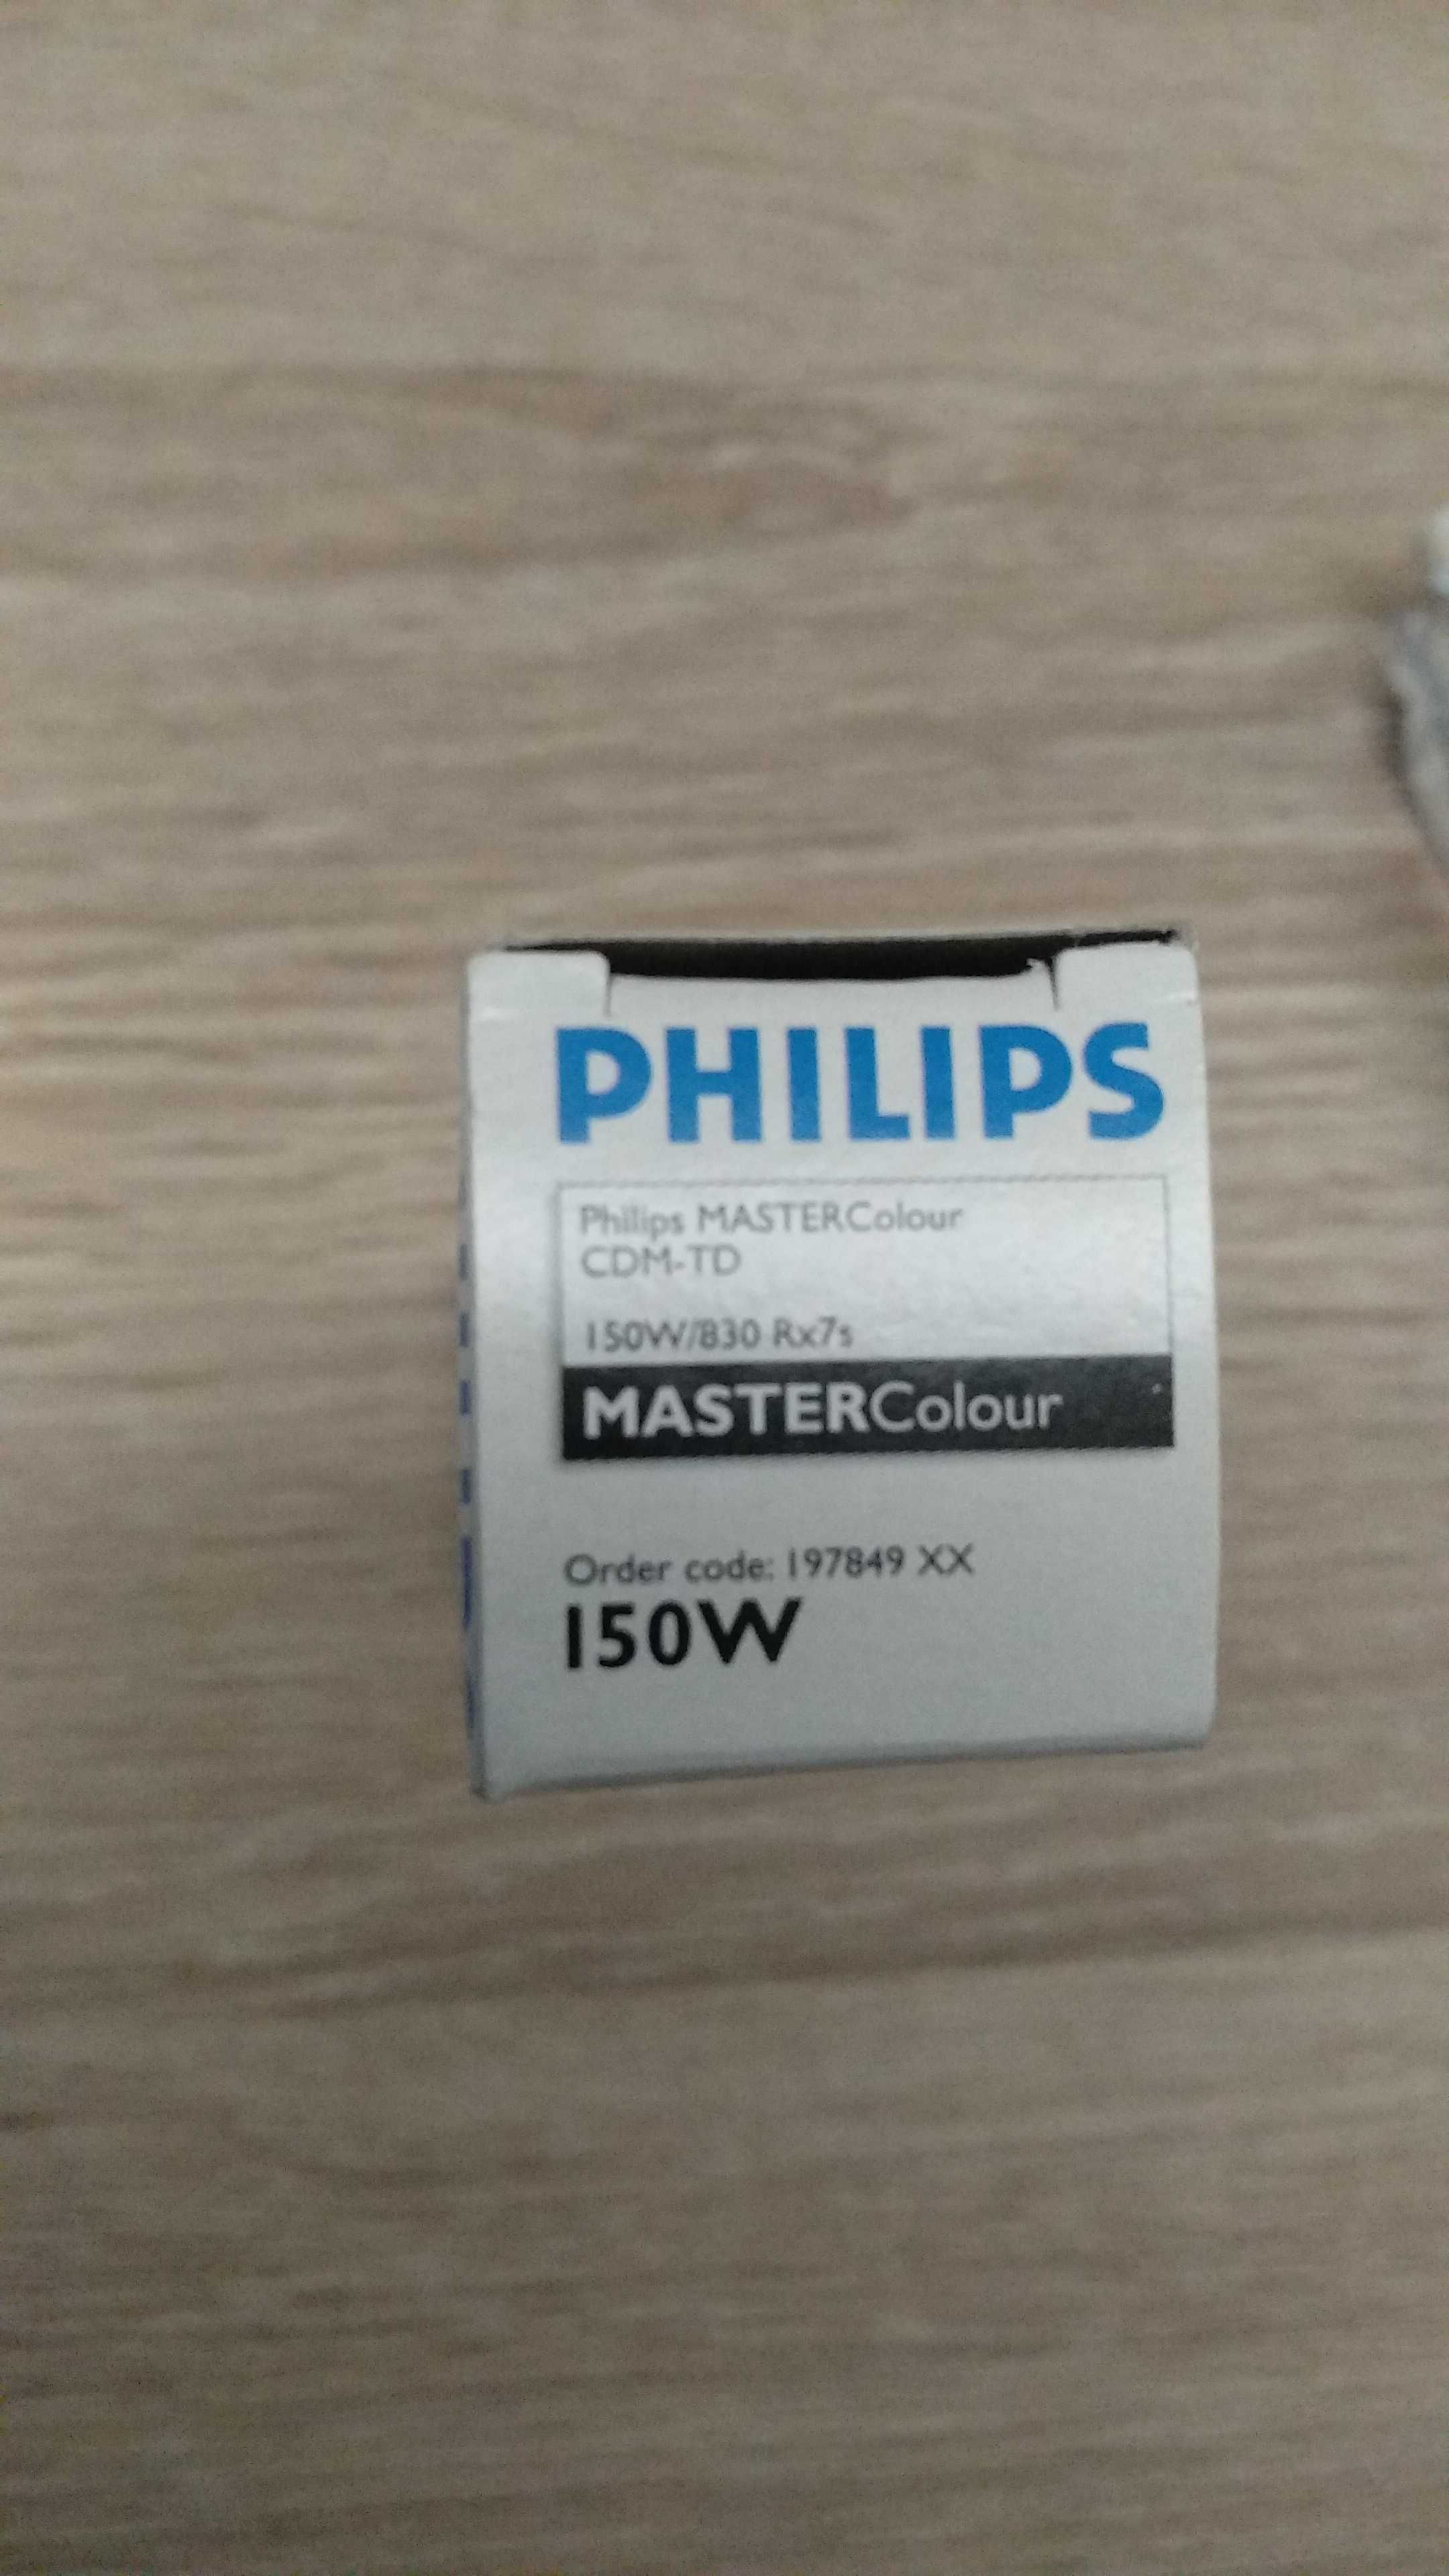 Philips Metalohalogen CDM-TD 150W/830 Rx7s